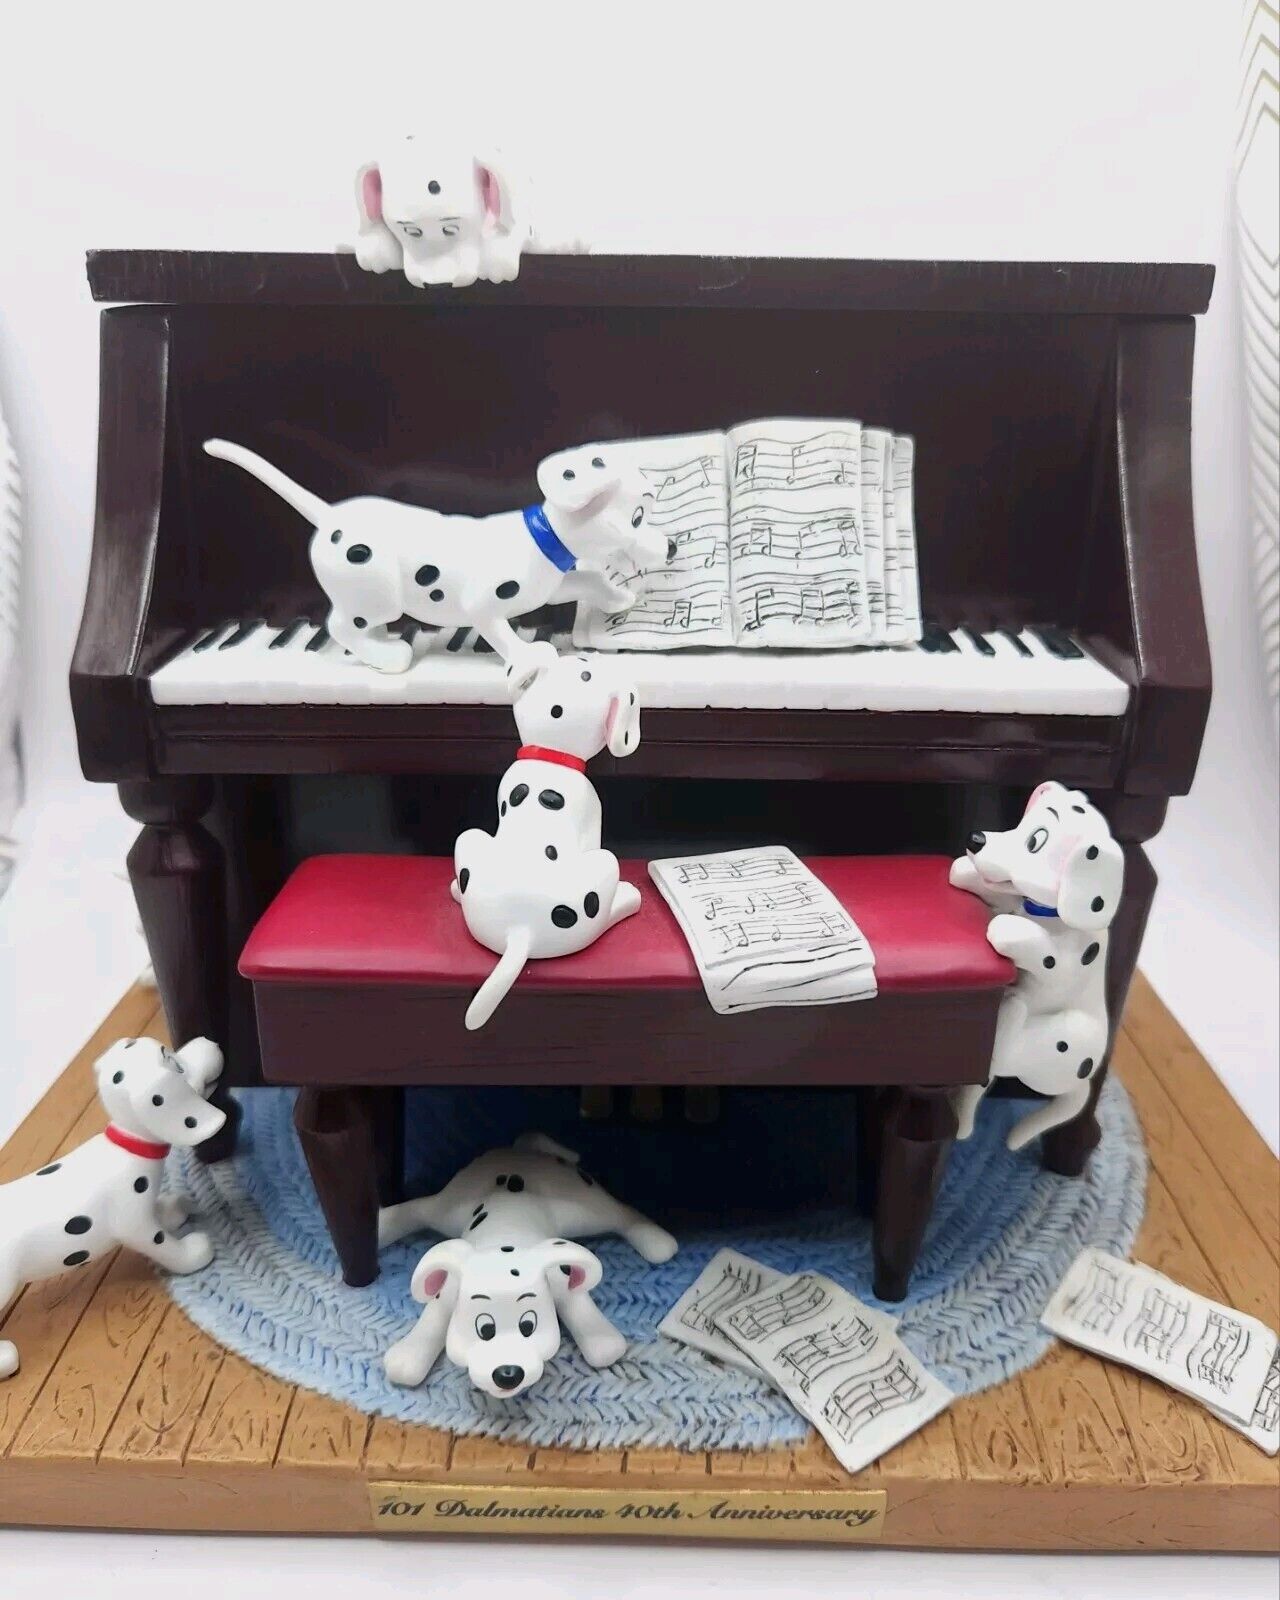 Disney 101 Dalmatians 40TH Anniversary Music Box Piano Figurine 2000 Plays